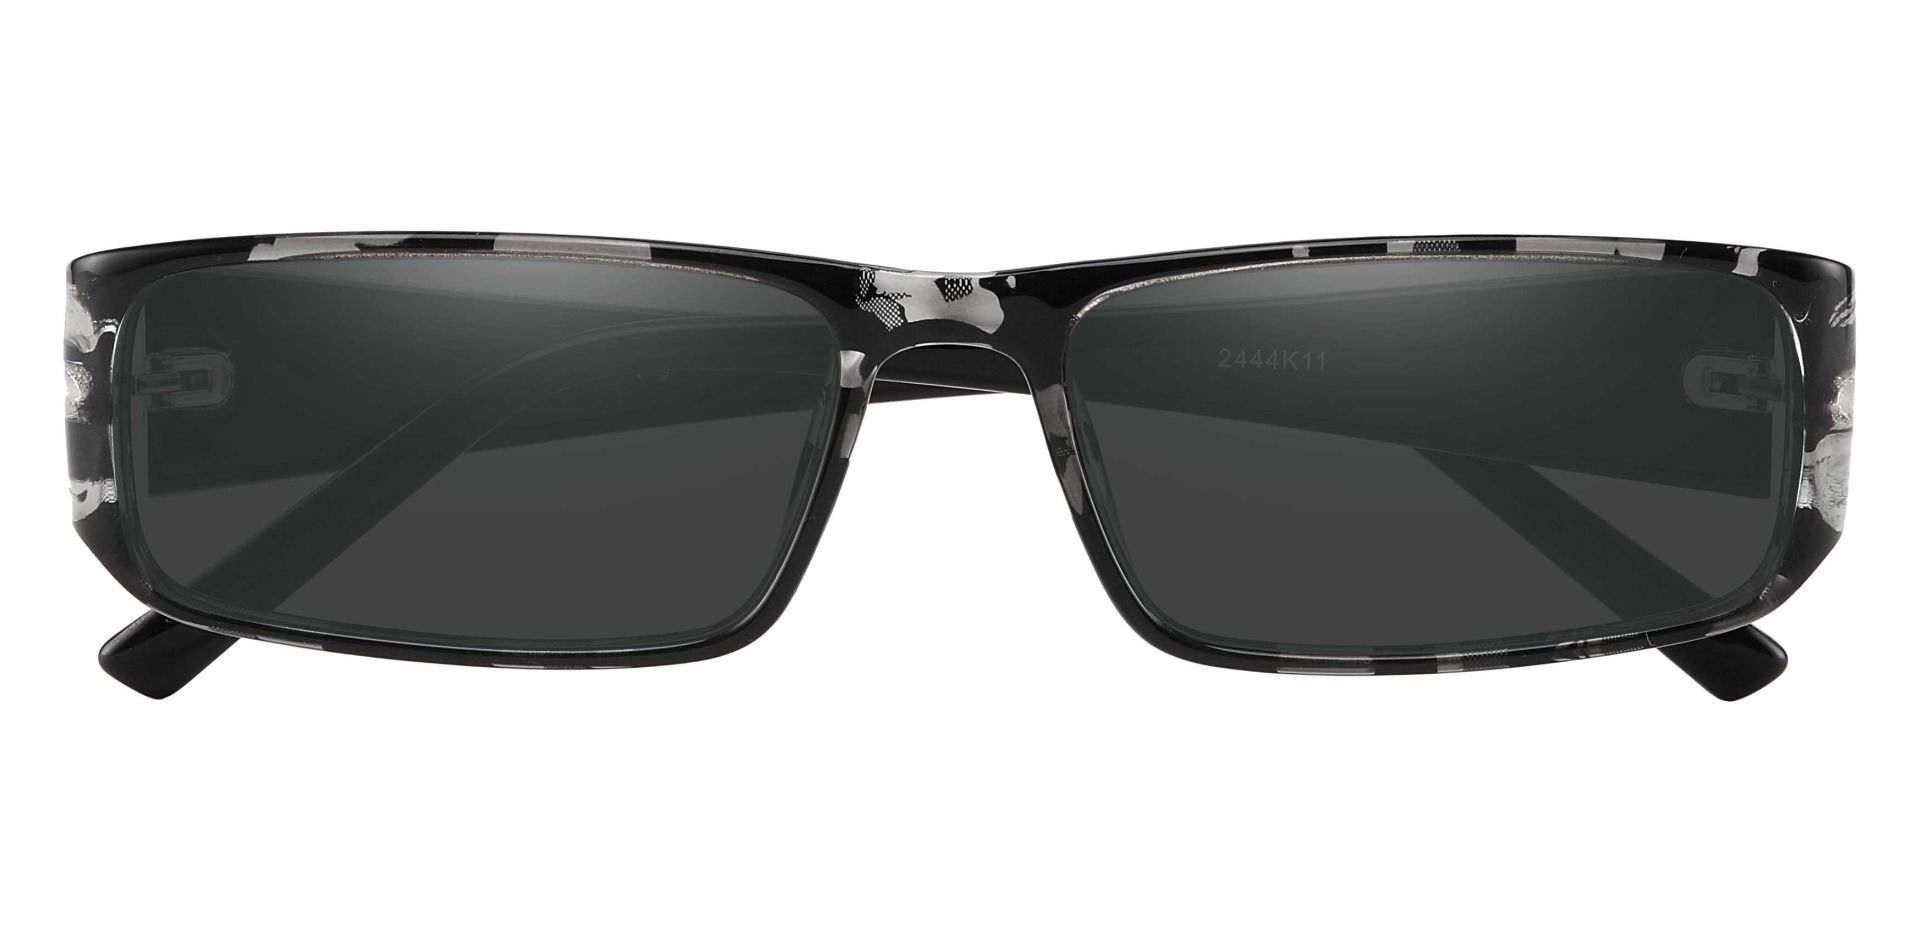 Elbert Rectangle Reading Sunglasses - Black Frame With Gray Lenses